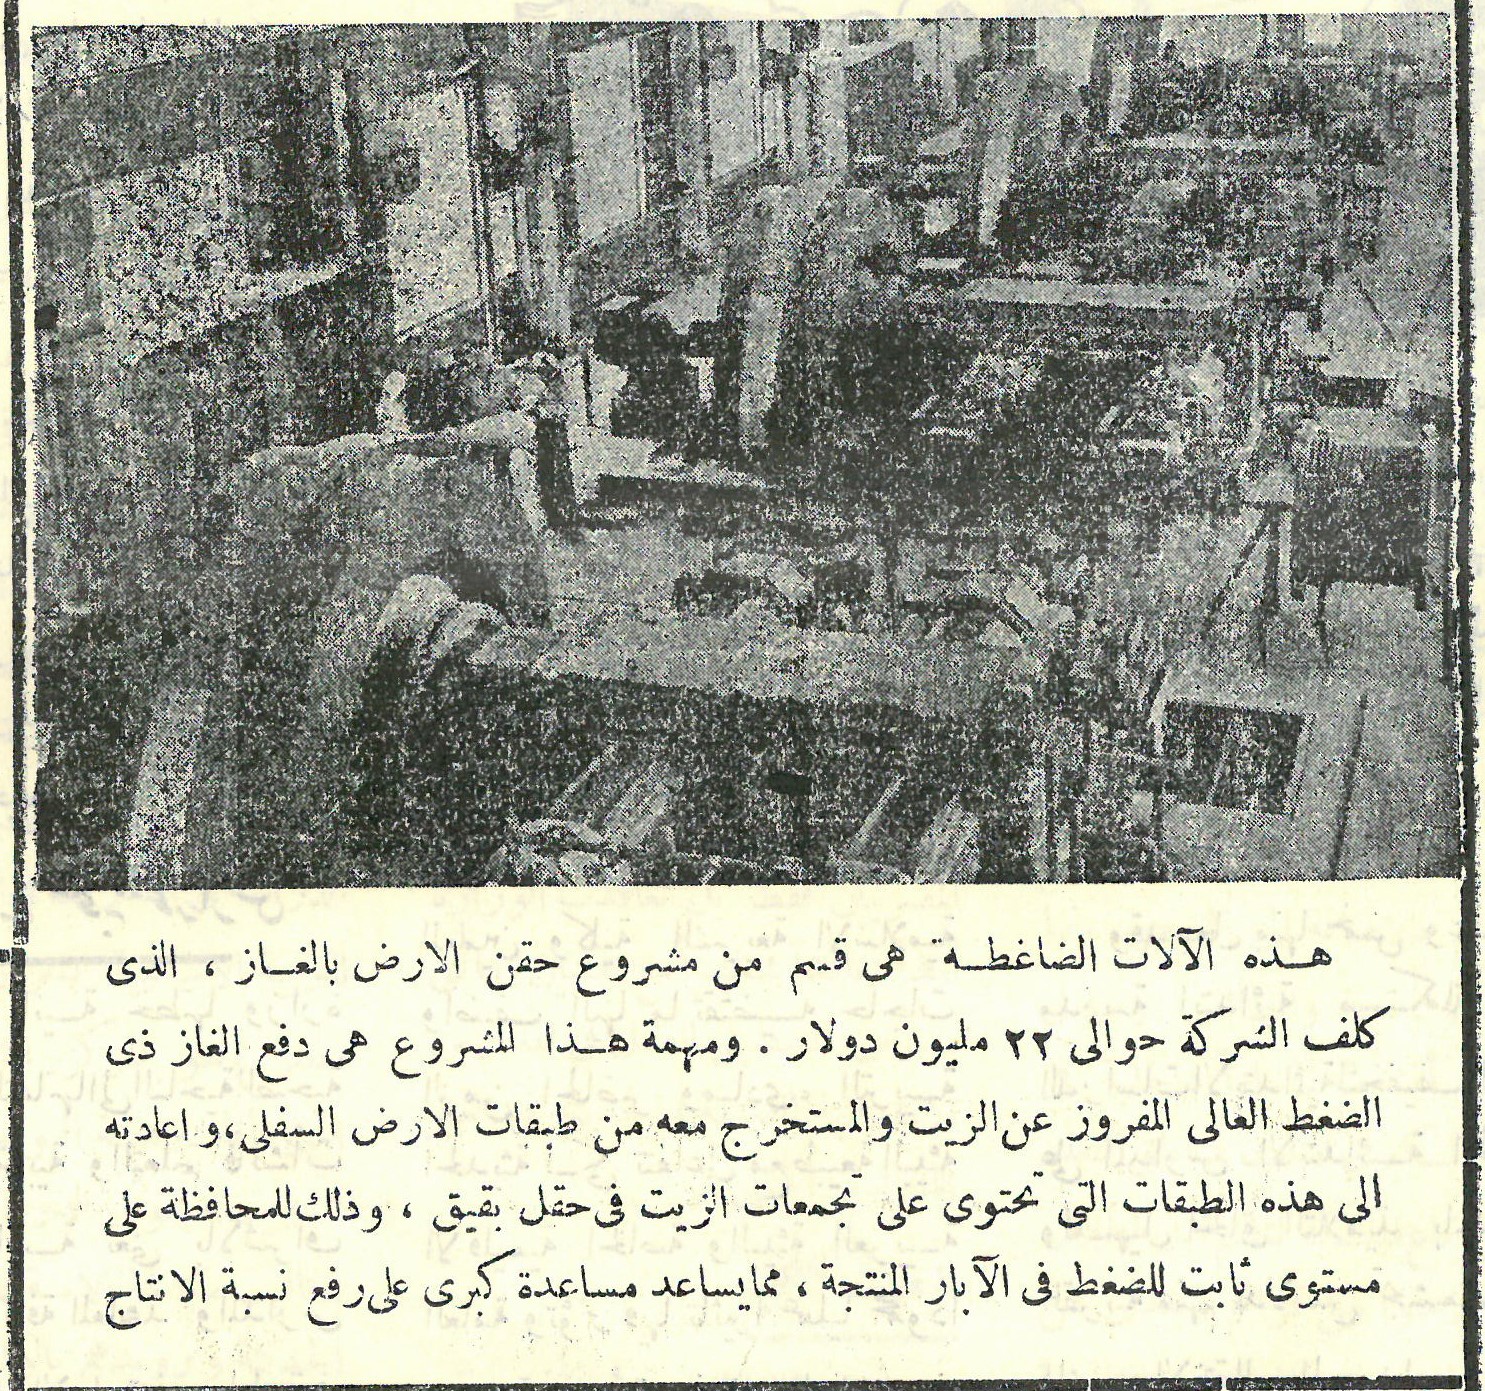 A project in Ras Tanura, 1954